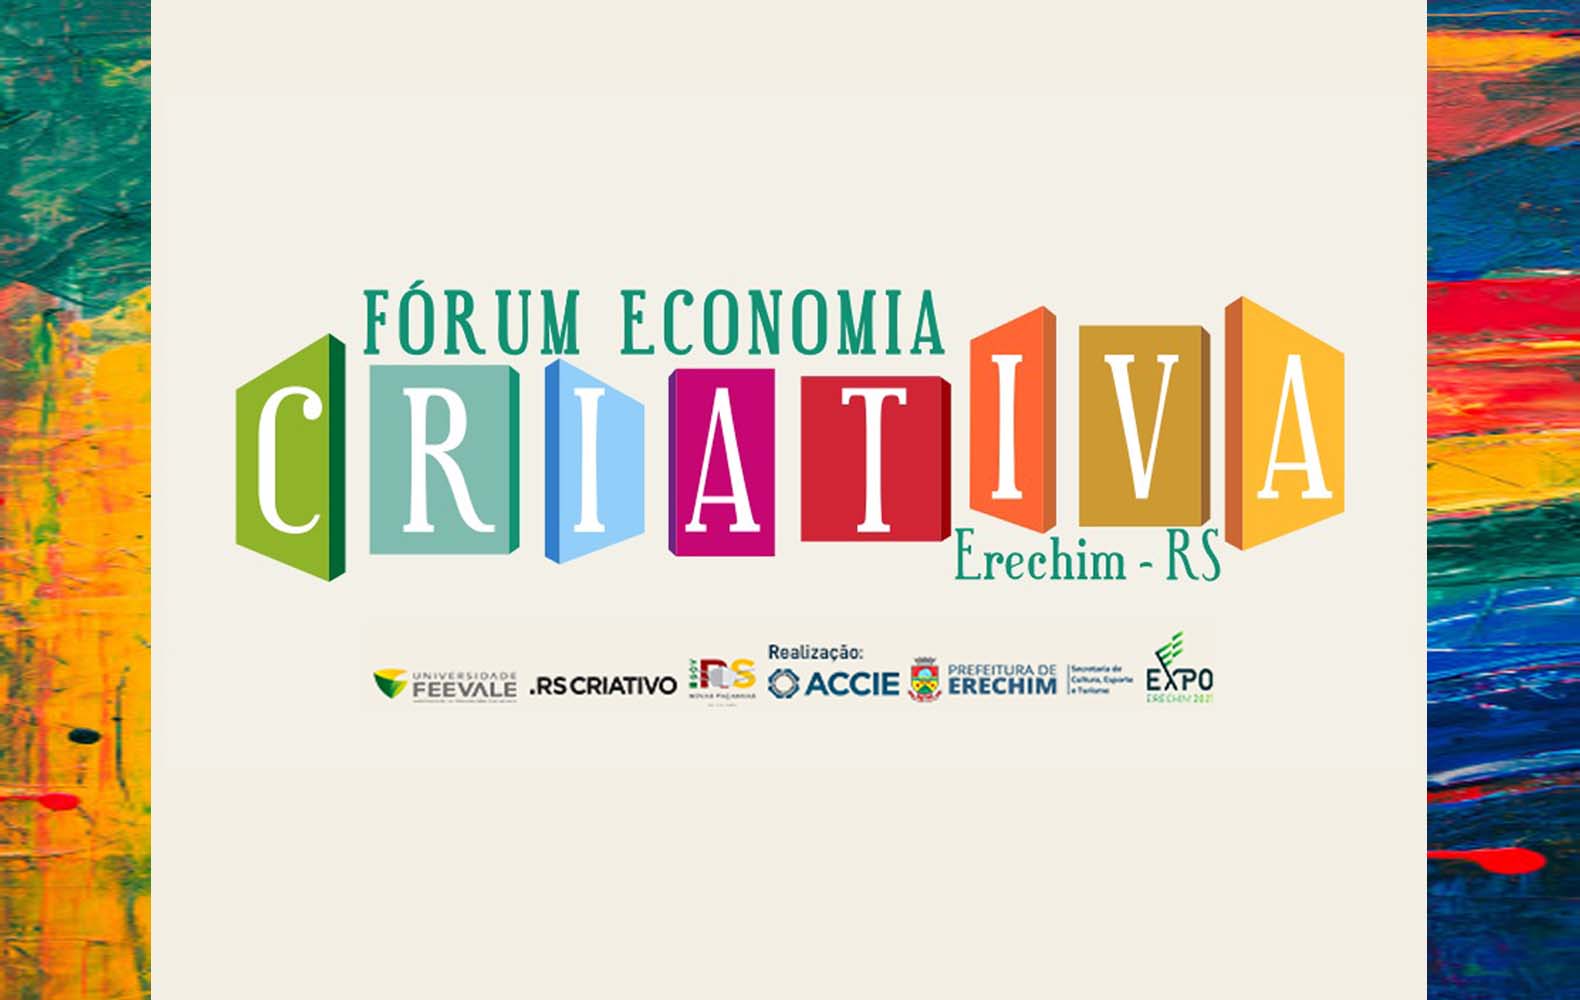  F?rum de Economia Criativa vai acontecer durante a Expo Erechim 2021